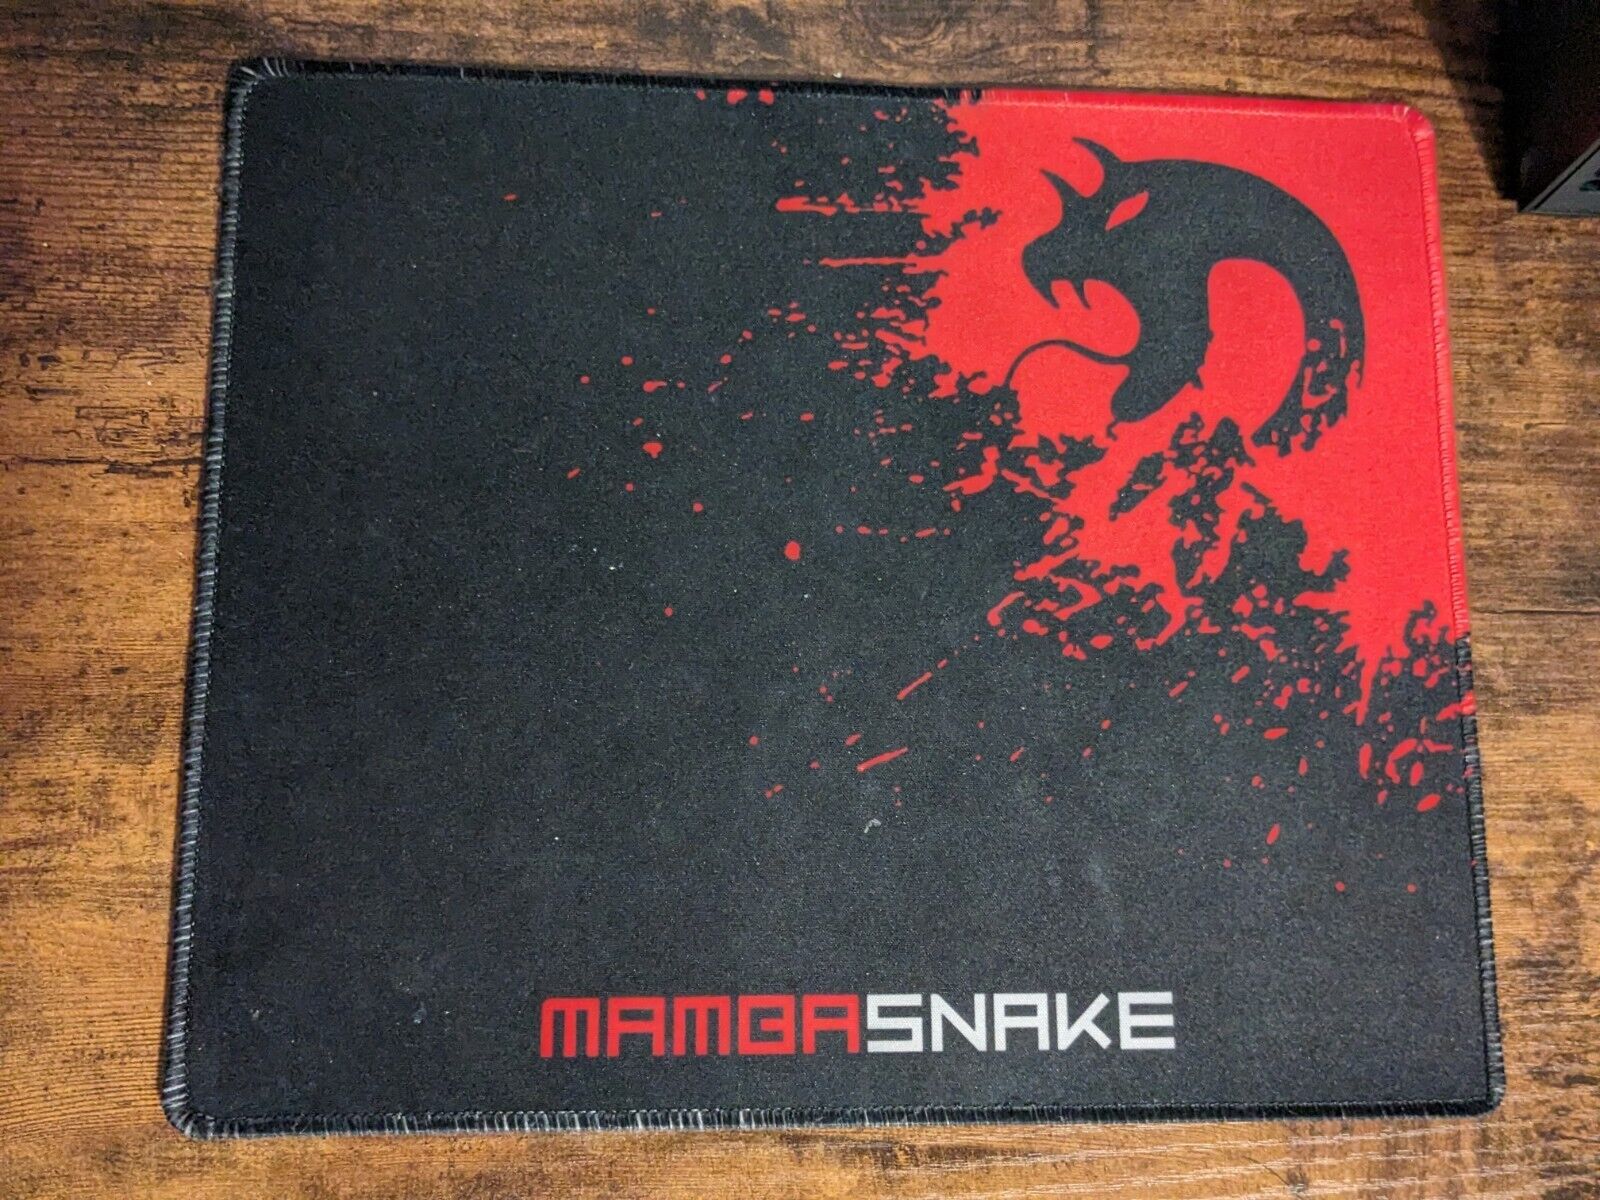 Black Mamga Snake Gaming Mouse Pad Non-Slip Smooth Mat Desk Mouse Pad  10